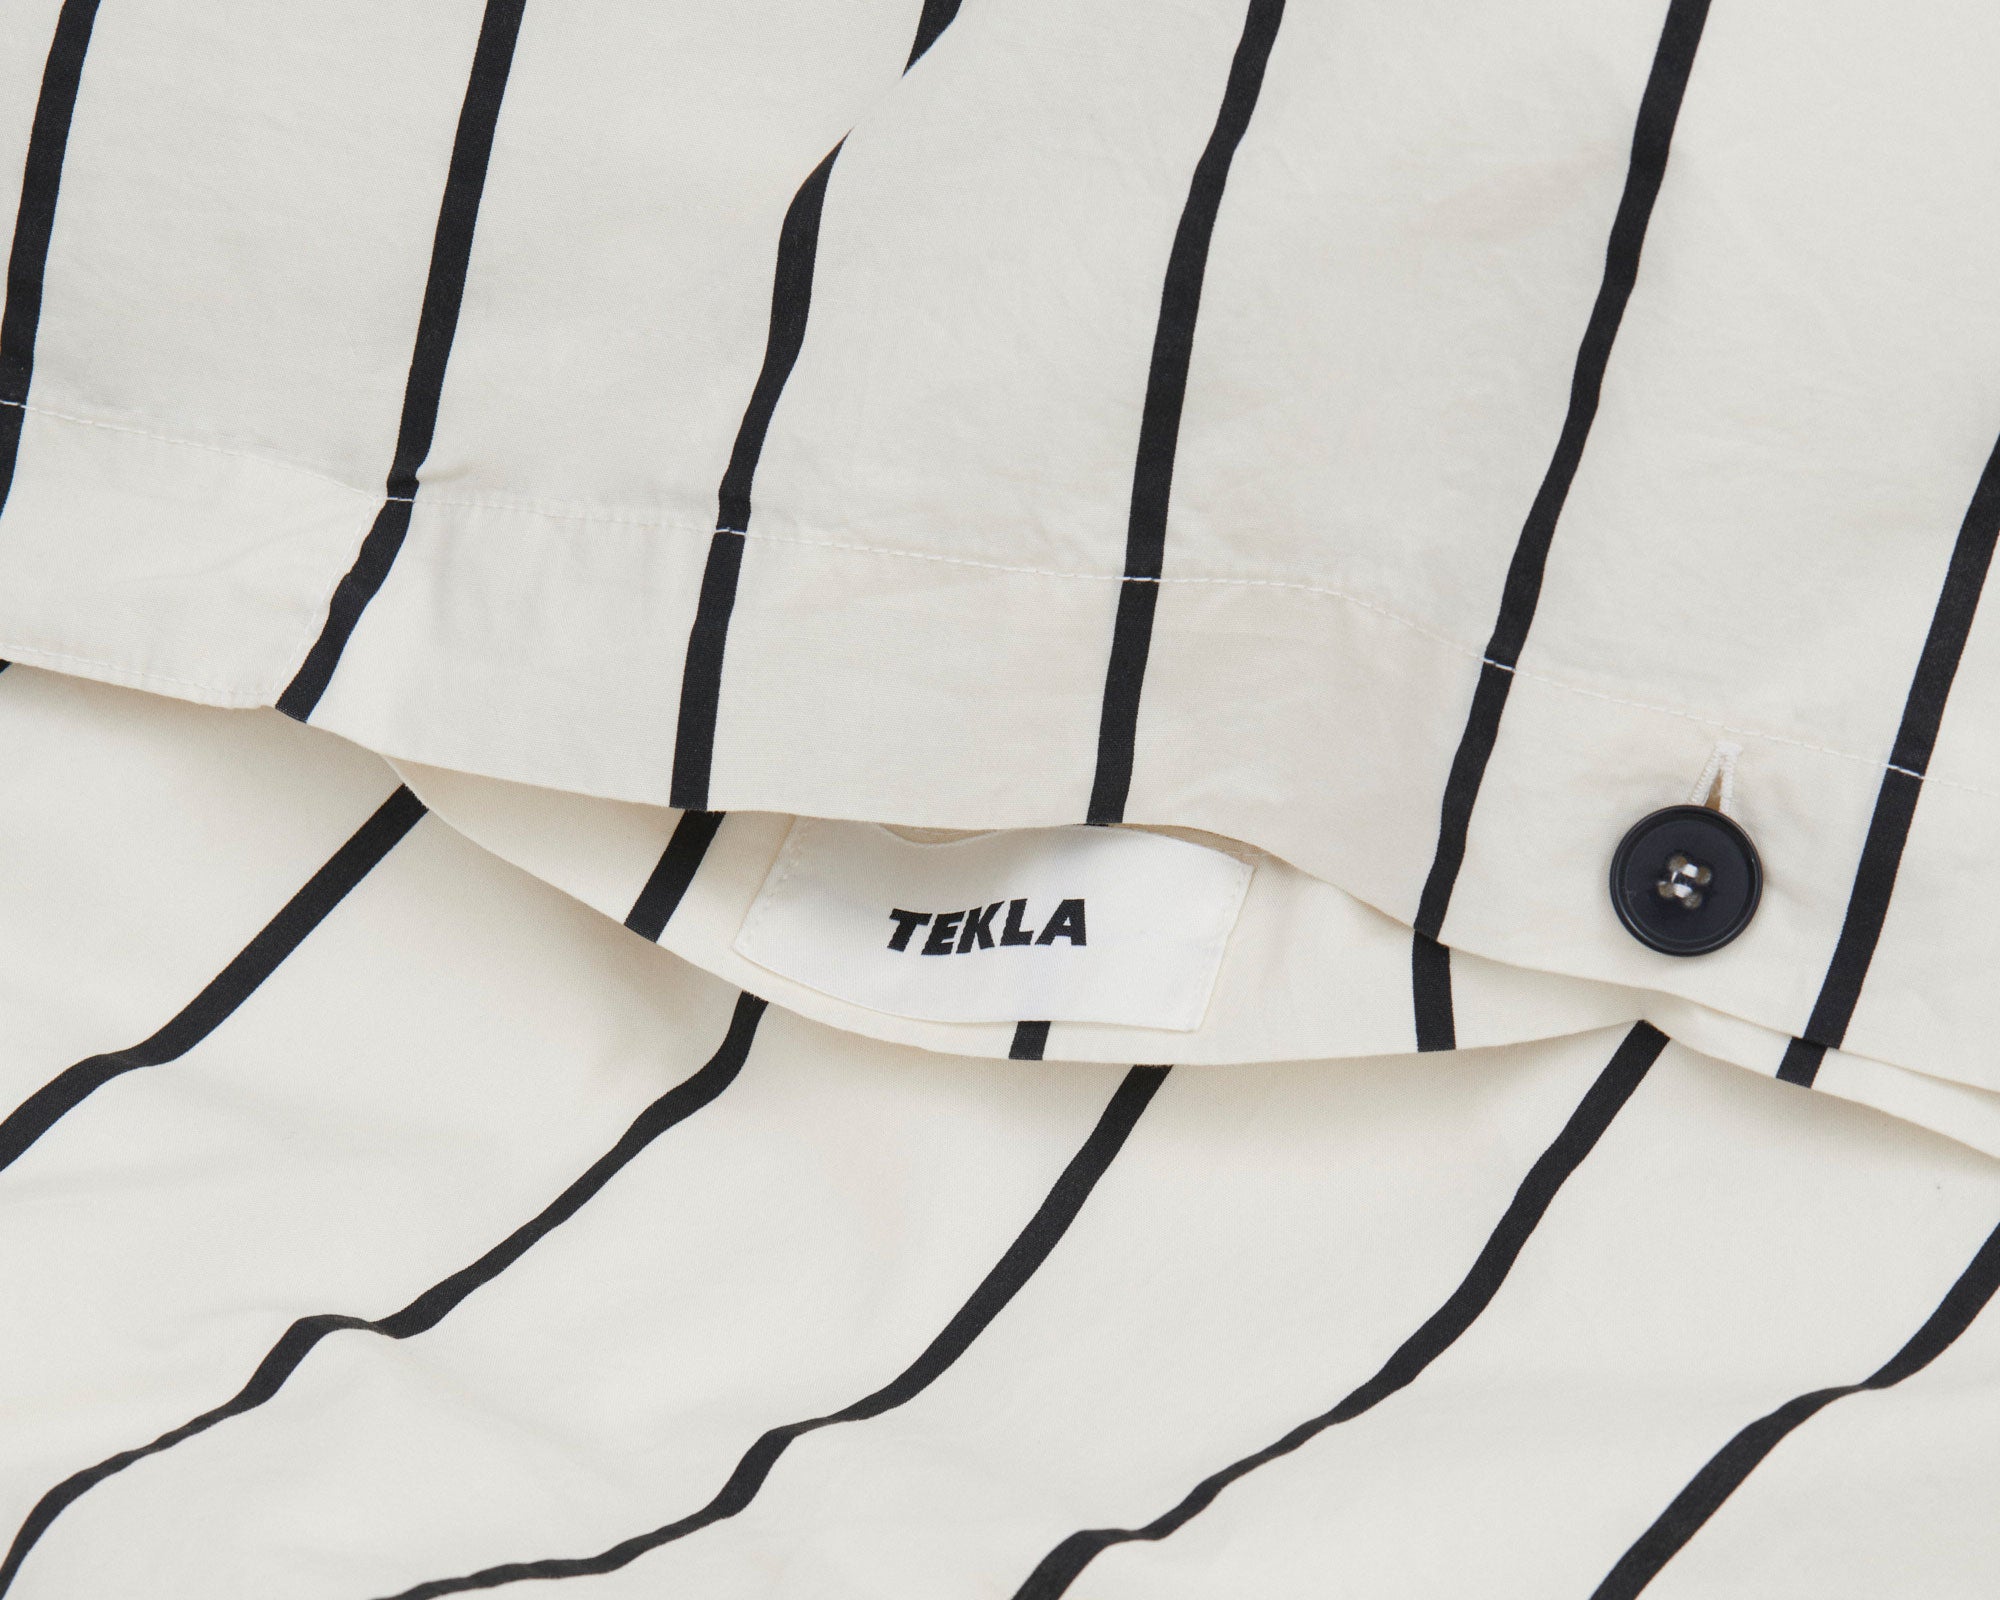 Tekla Cotton Percale Bedding - Shadow Stripes